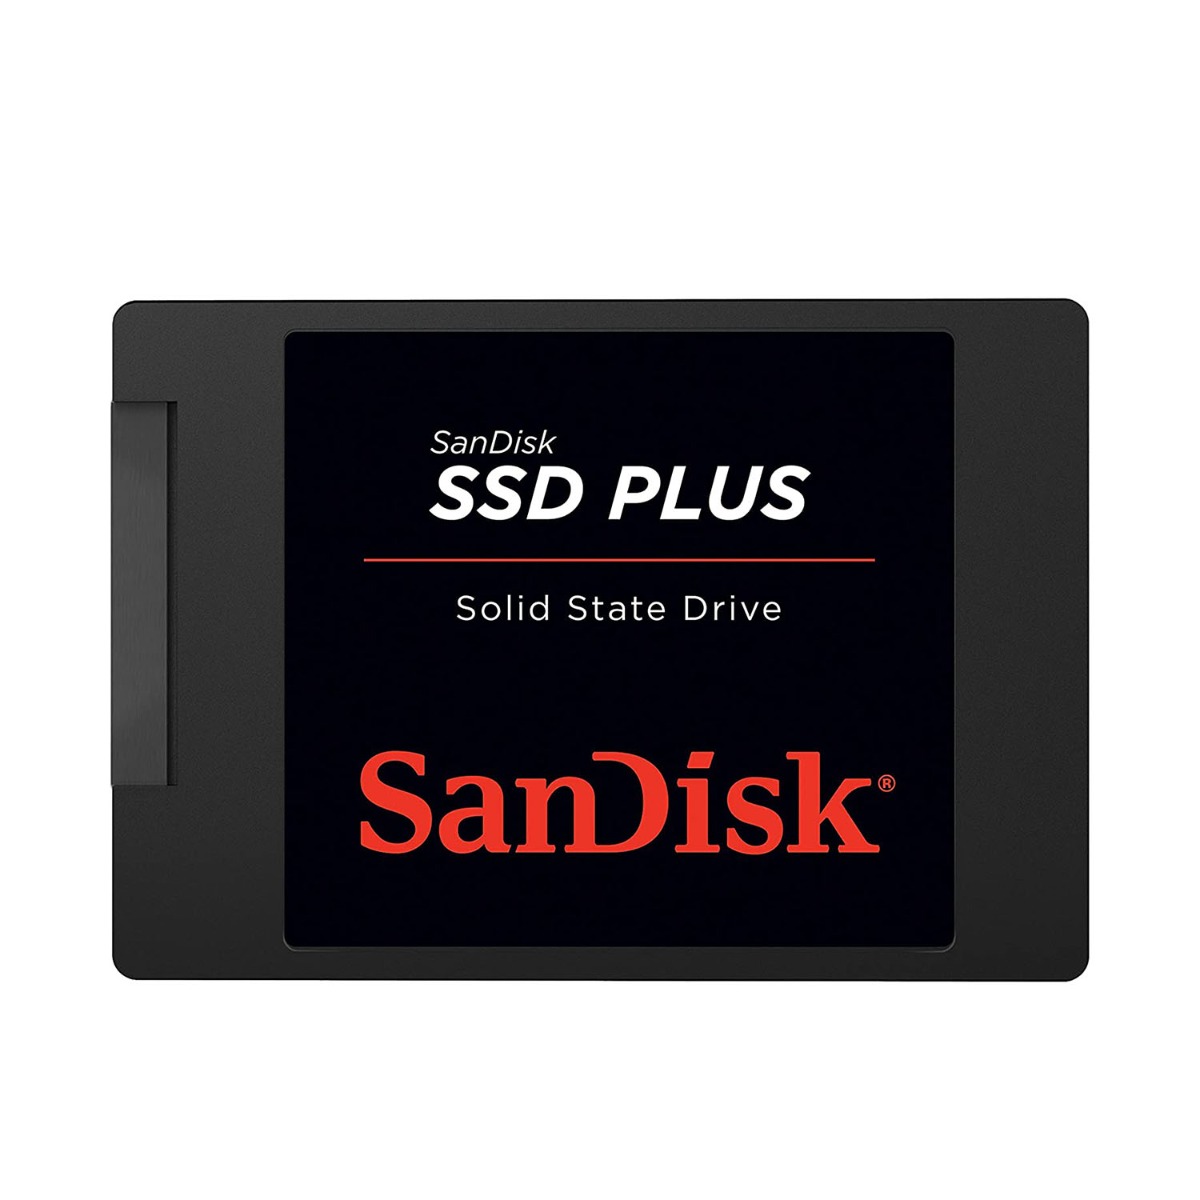 SanDisk SSD PLUS 120 GB Sata III 2.5 Inch Internal SSD, Up to 530 MB/s , Black